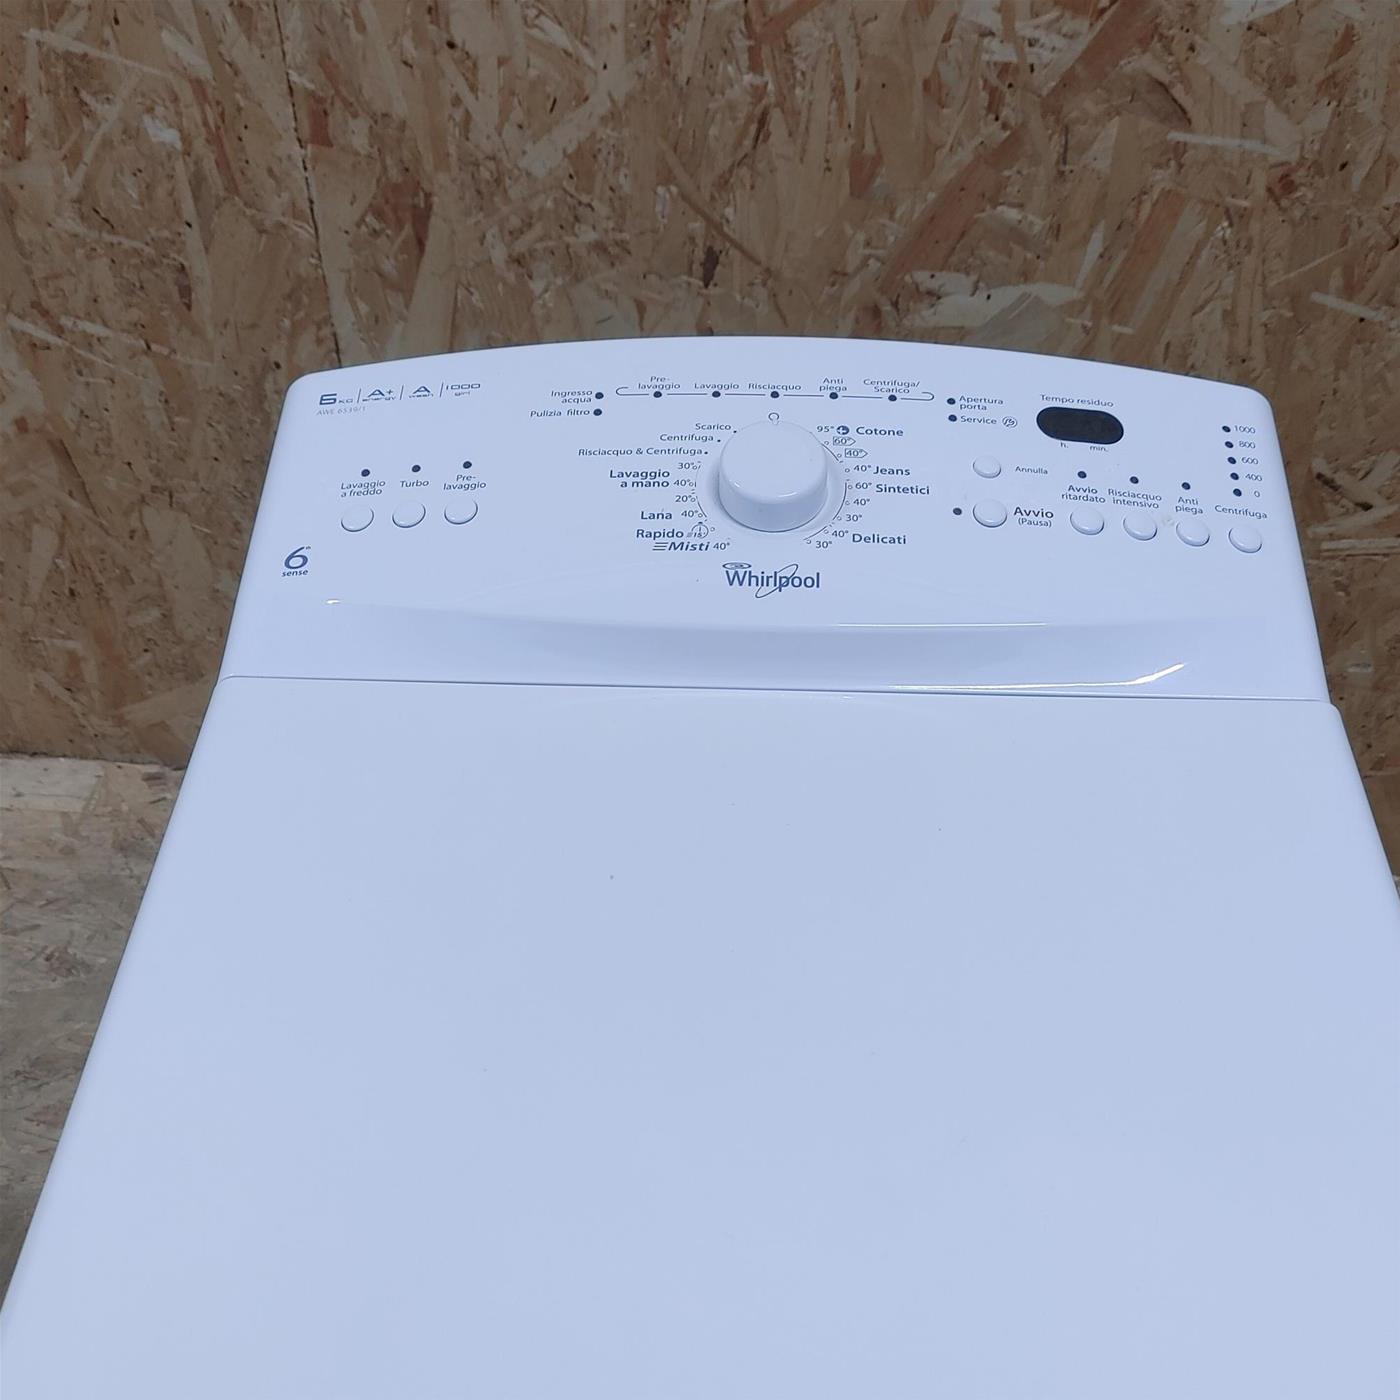 Whirlpool AWE6539 lavatrice Caricamento dall'alto 6 kg 1000 Giri/min Bianco